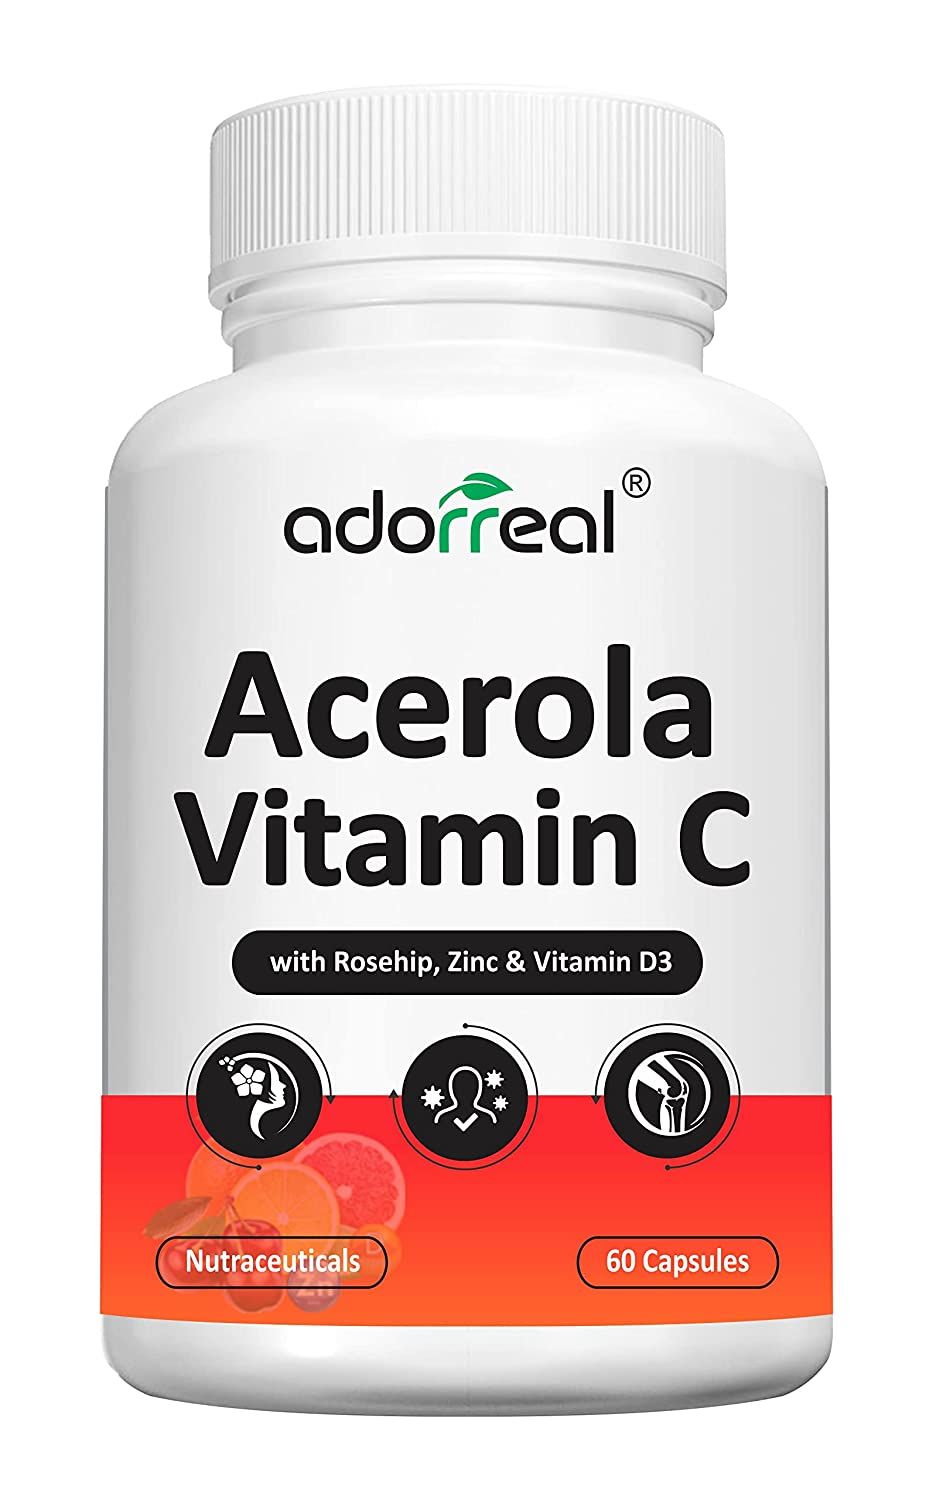 Adorreal Acerola Vitamin C Image